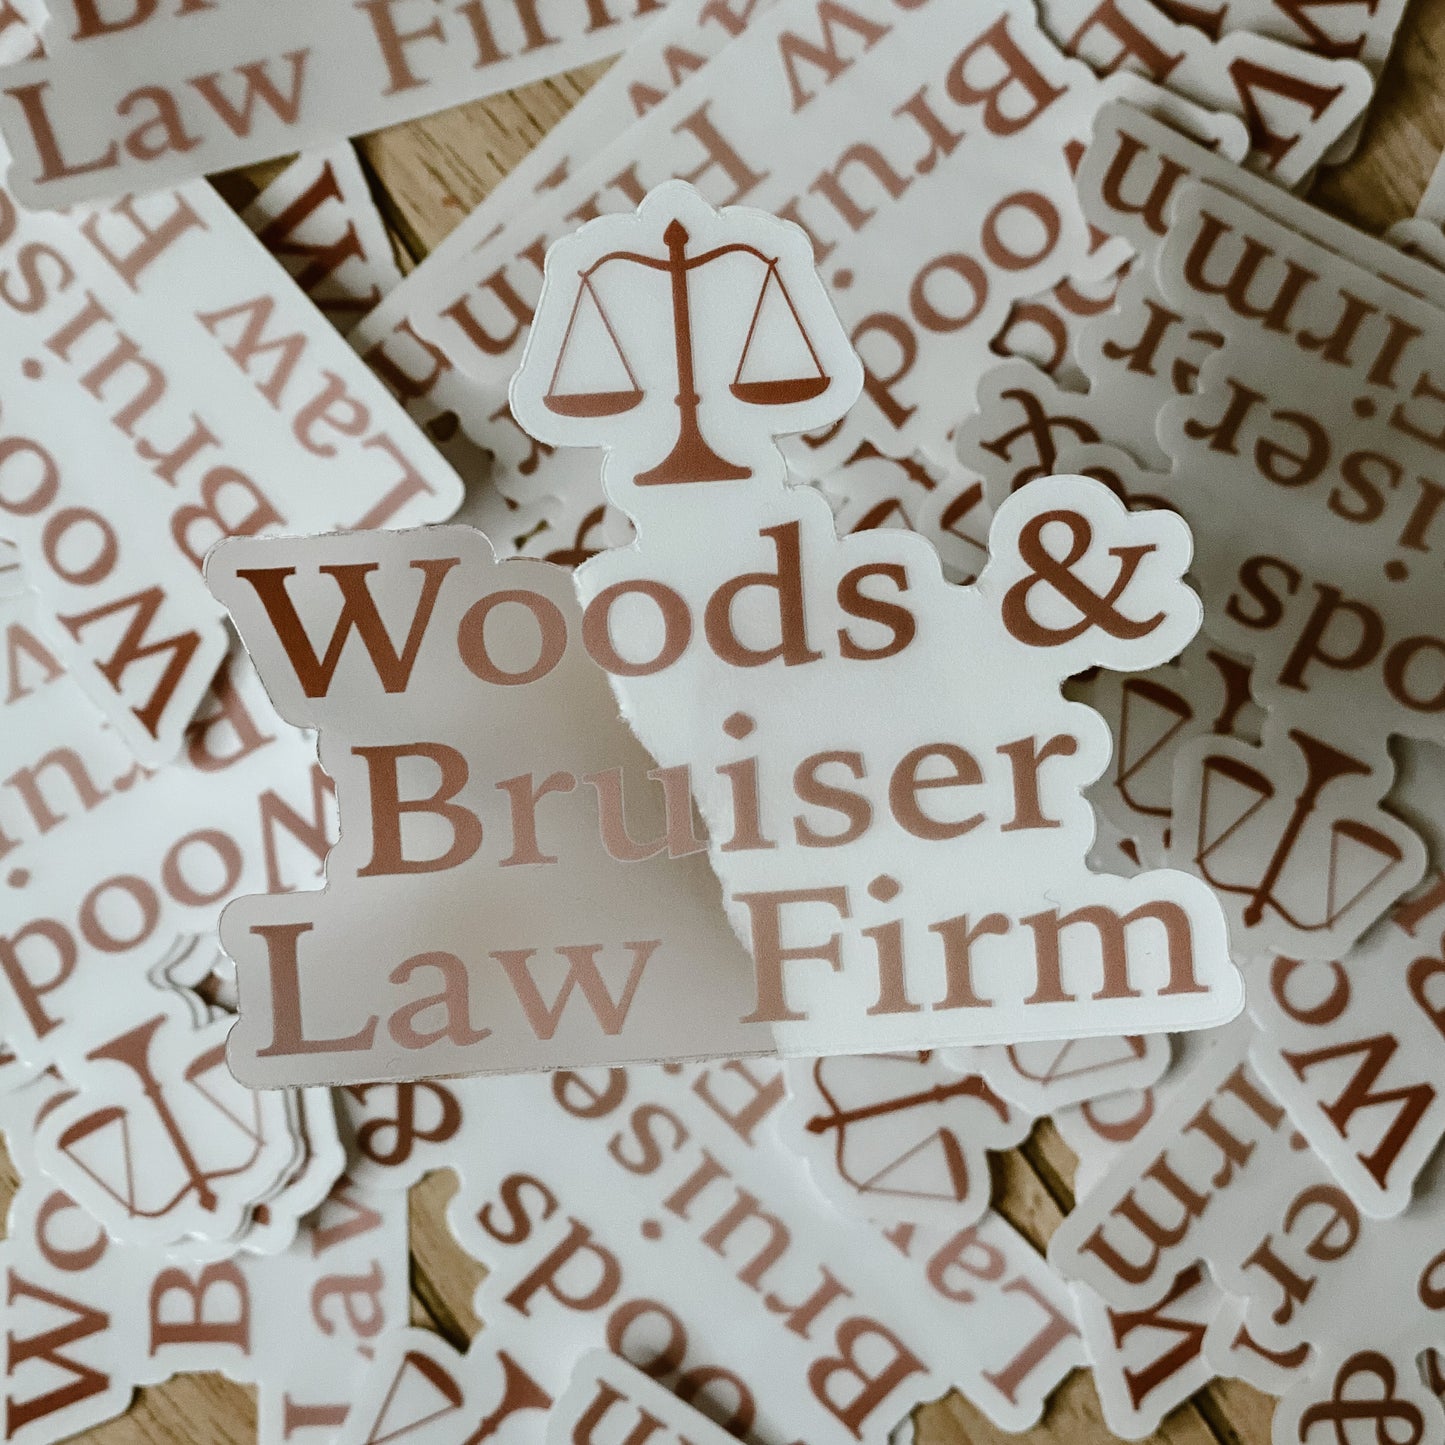 Woods & Bruiser Law Firm Sticker